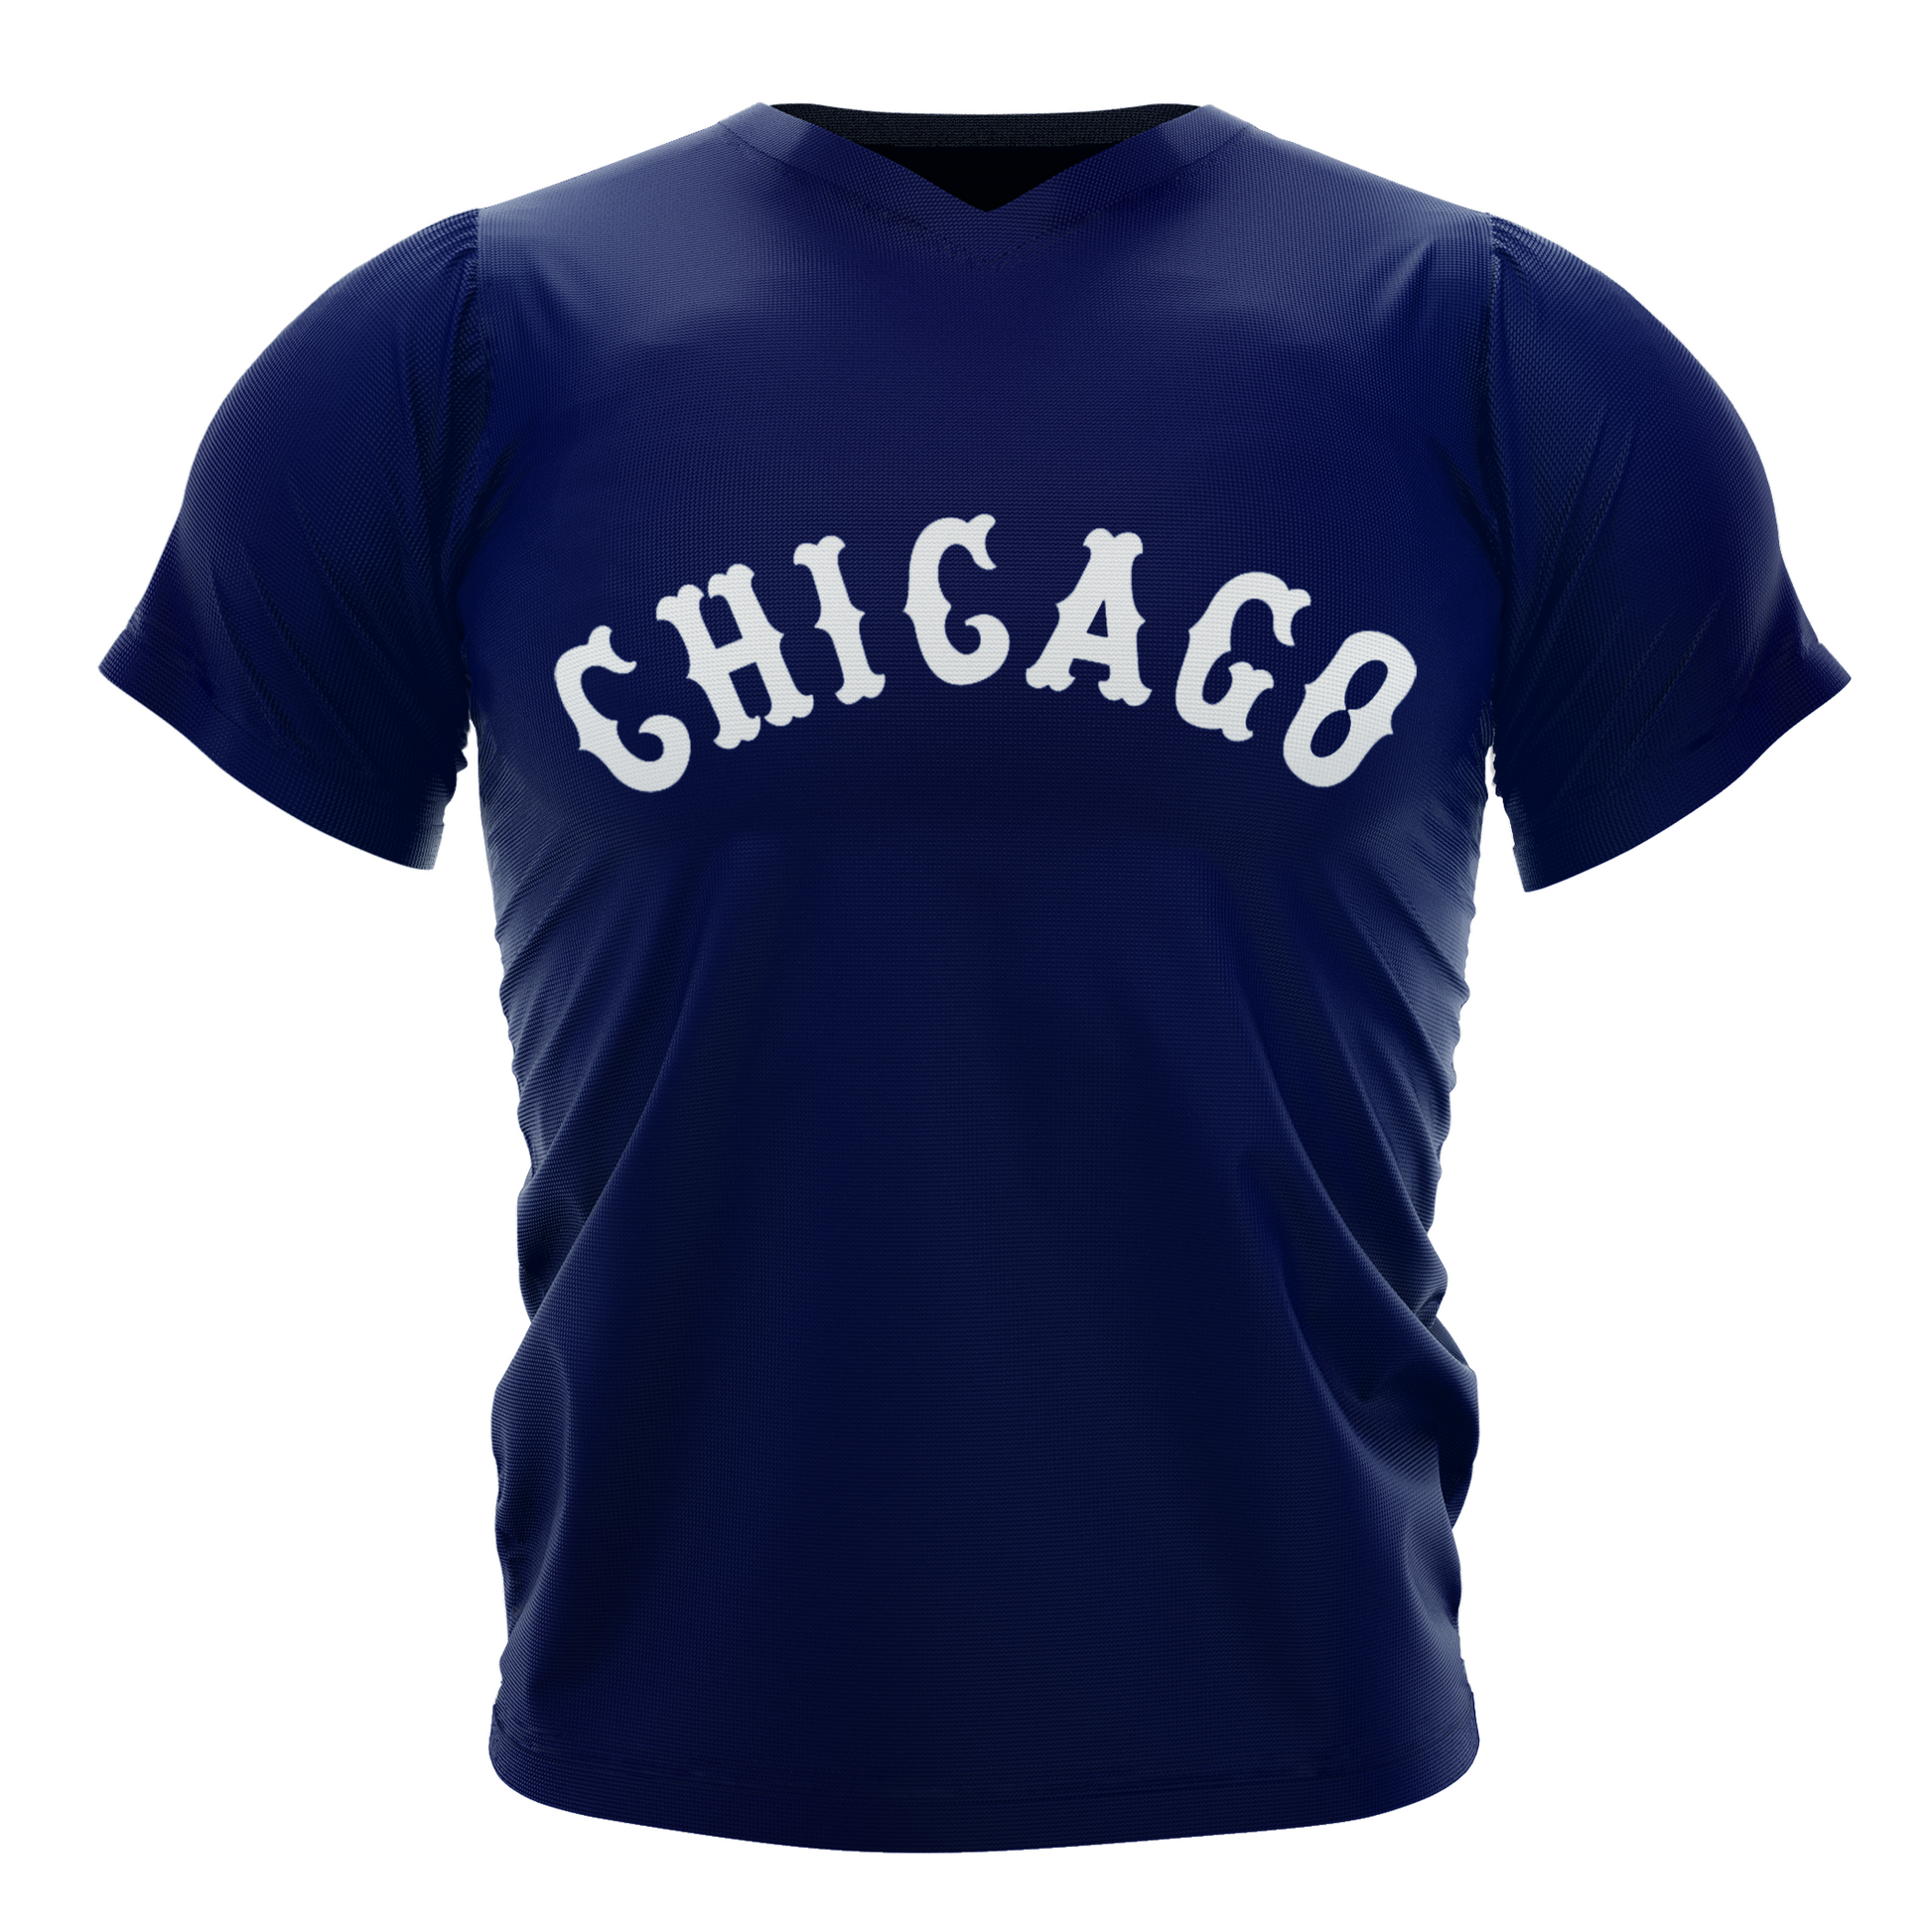 Southside Chicago Baseball Jersey - Gray - Small - Royal Retros